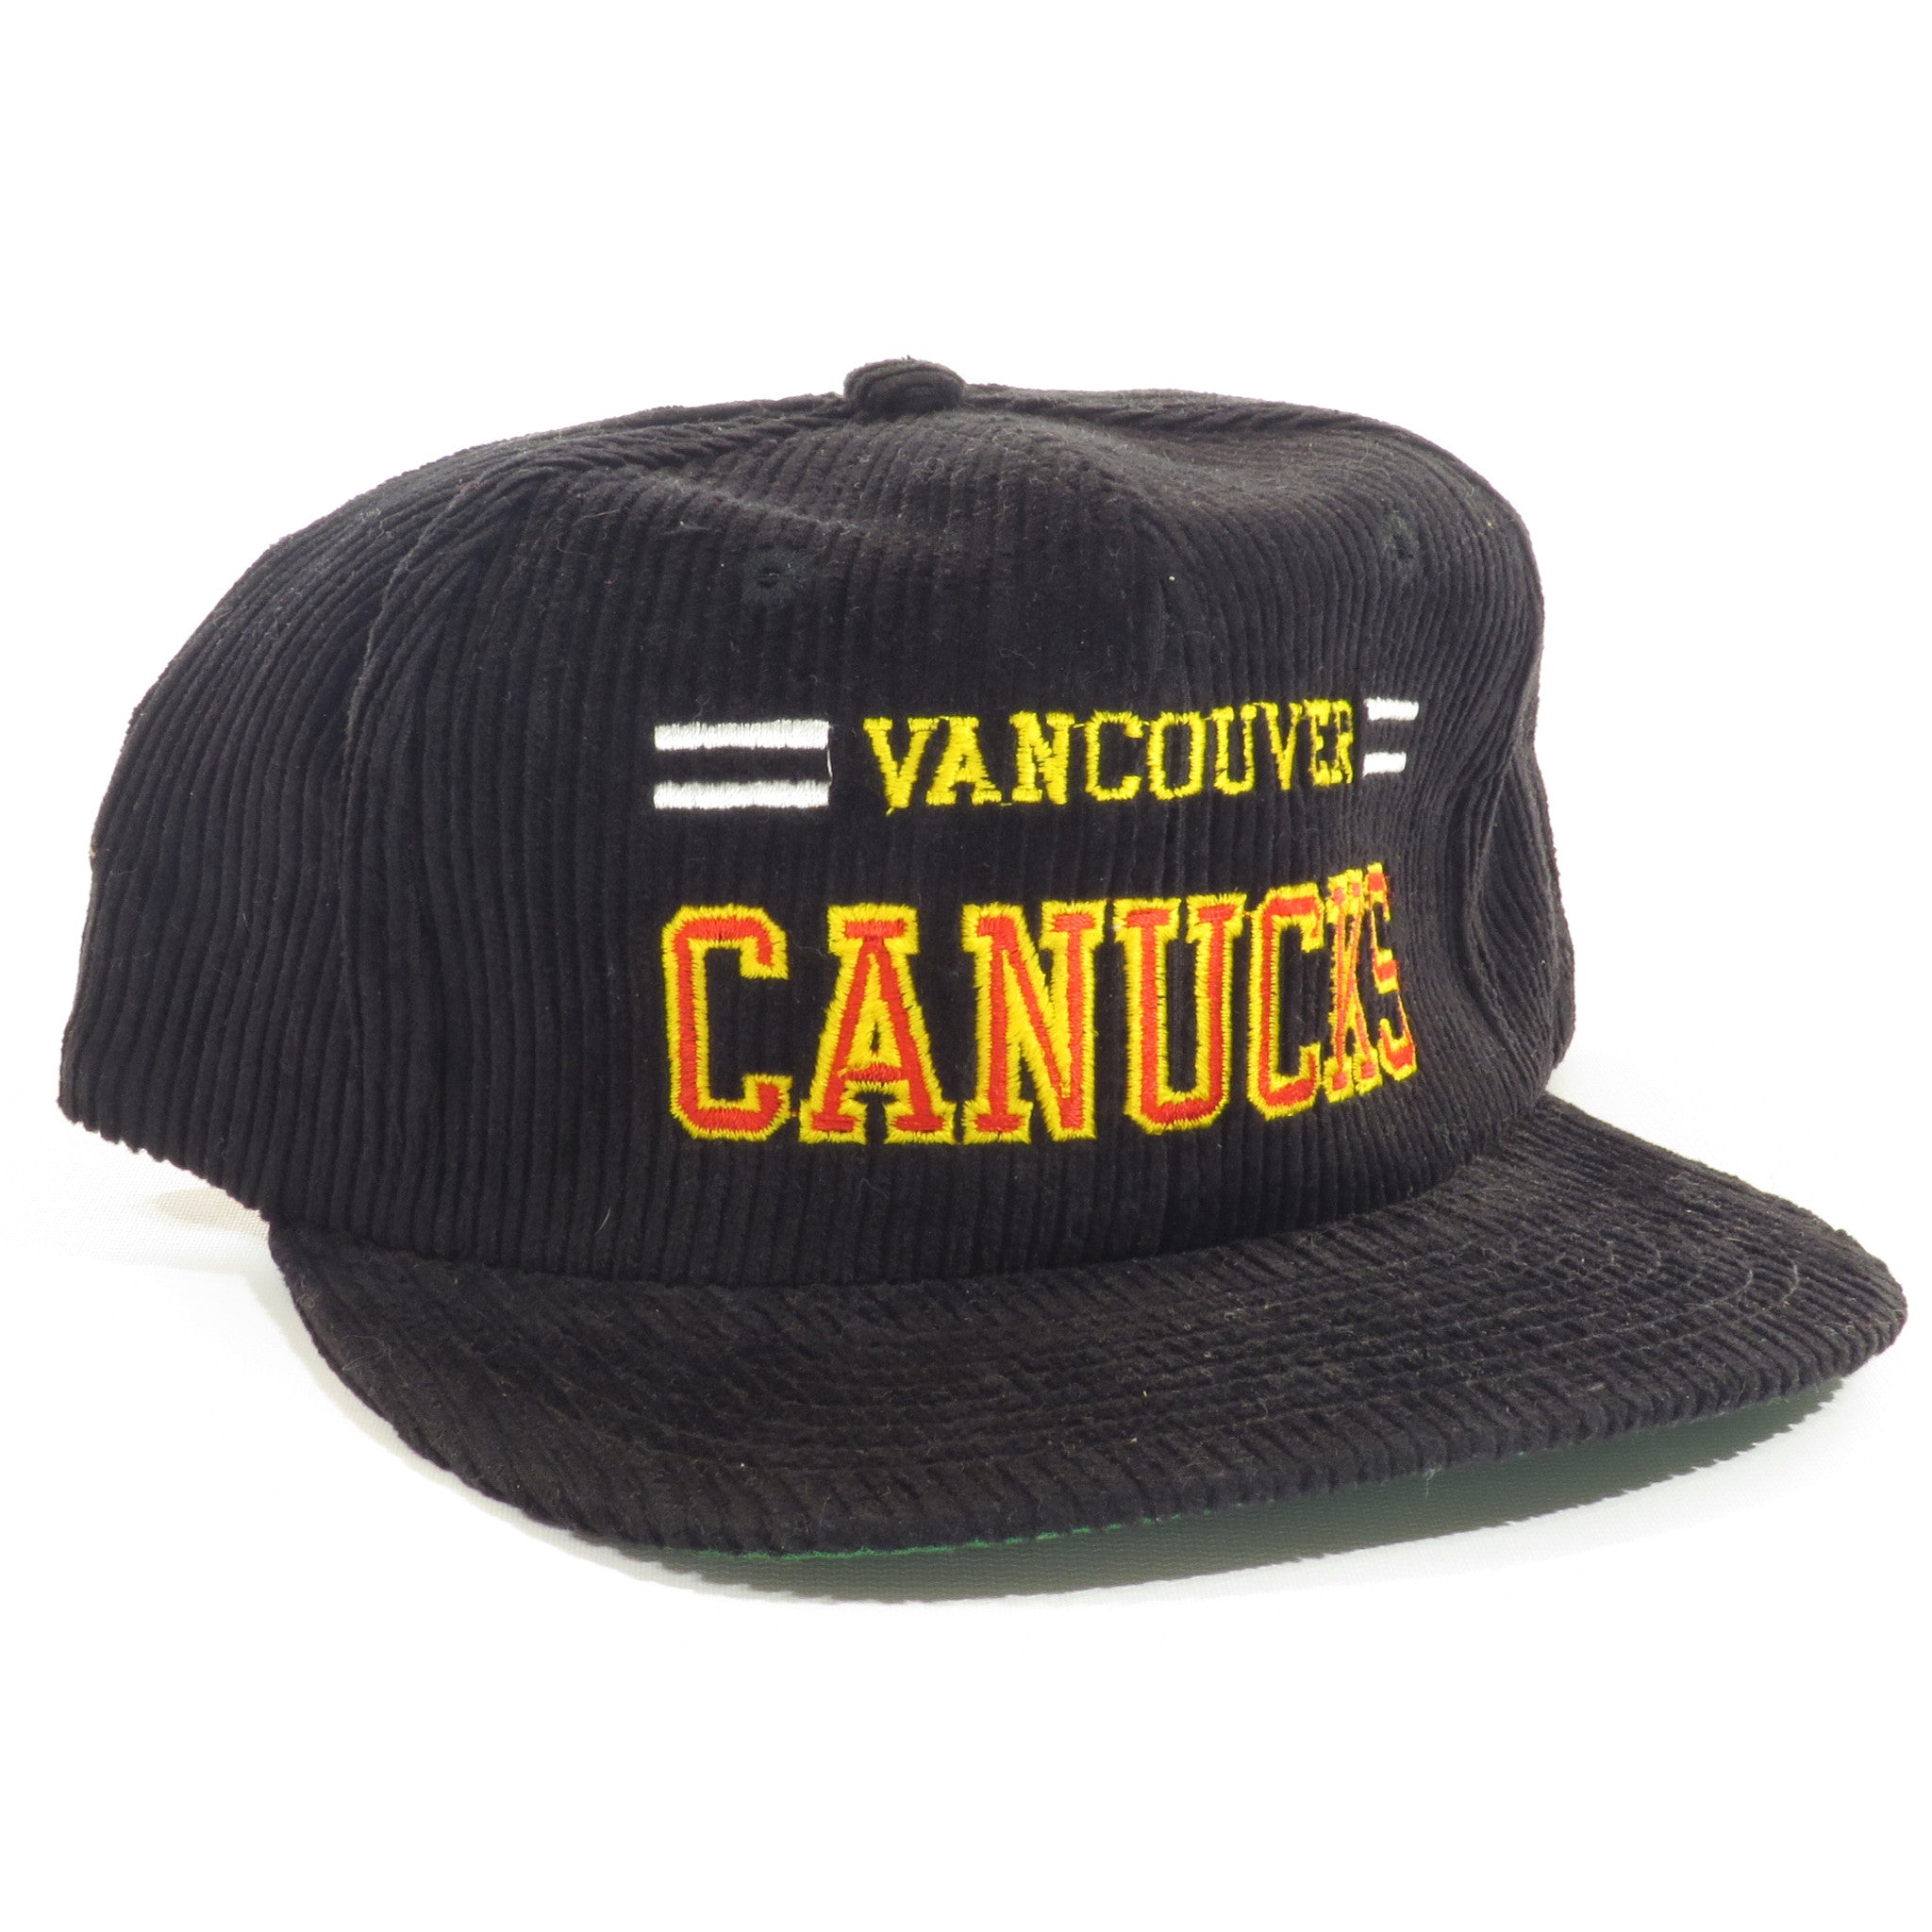 Vancouver Canucks Corduroy Snapback Hat